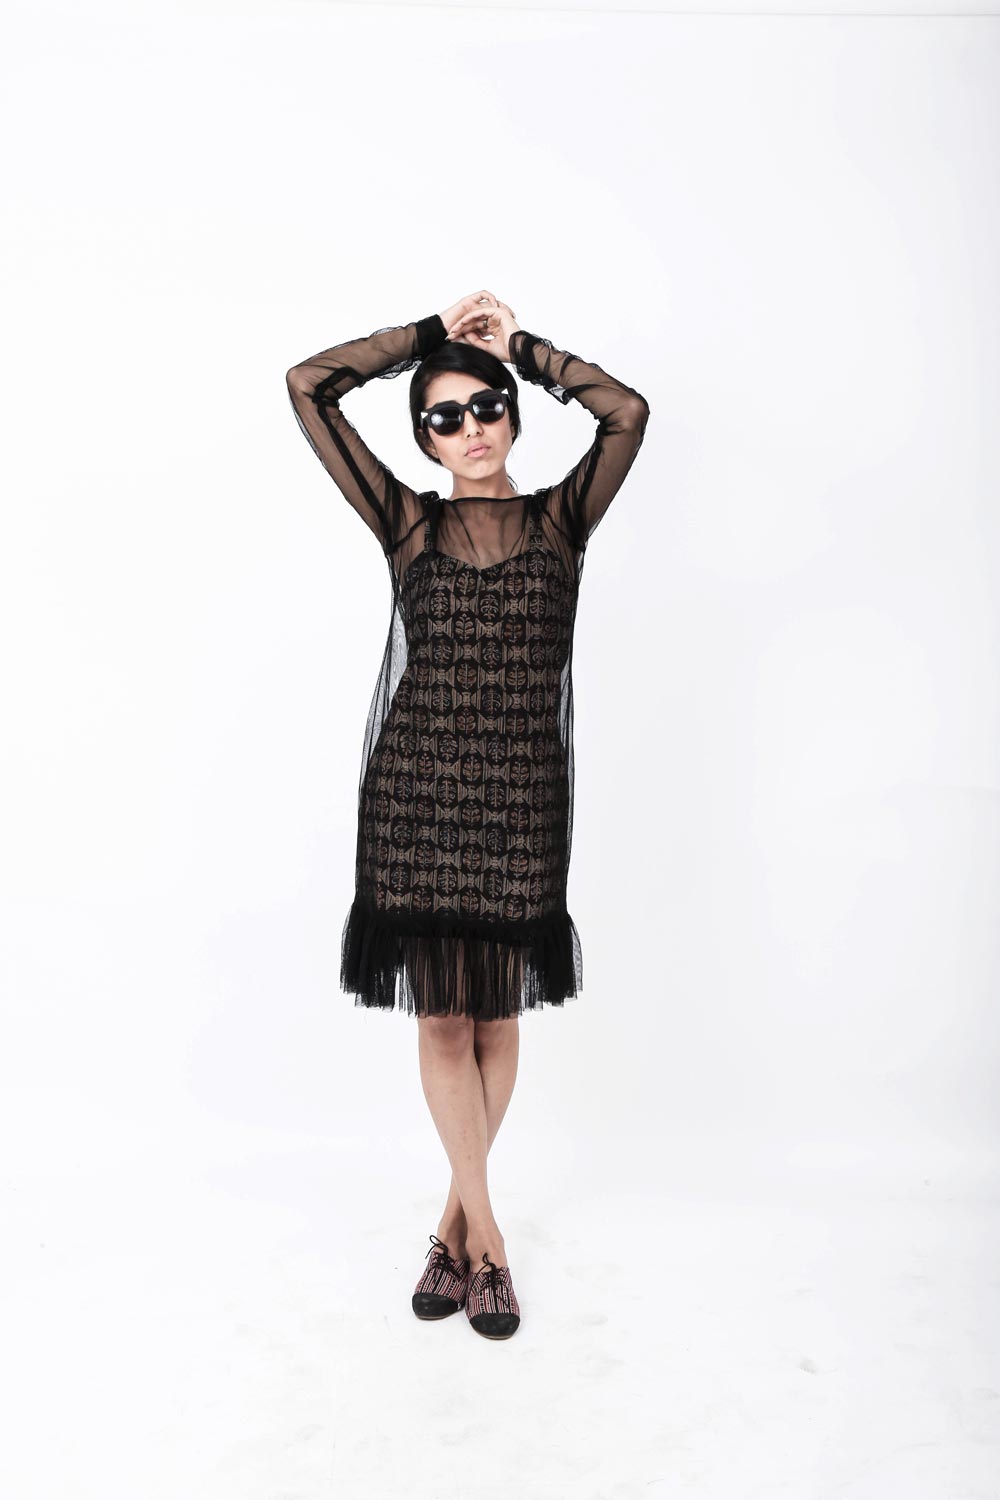 Block printed Kalamkari Dress With Tulle Overlay